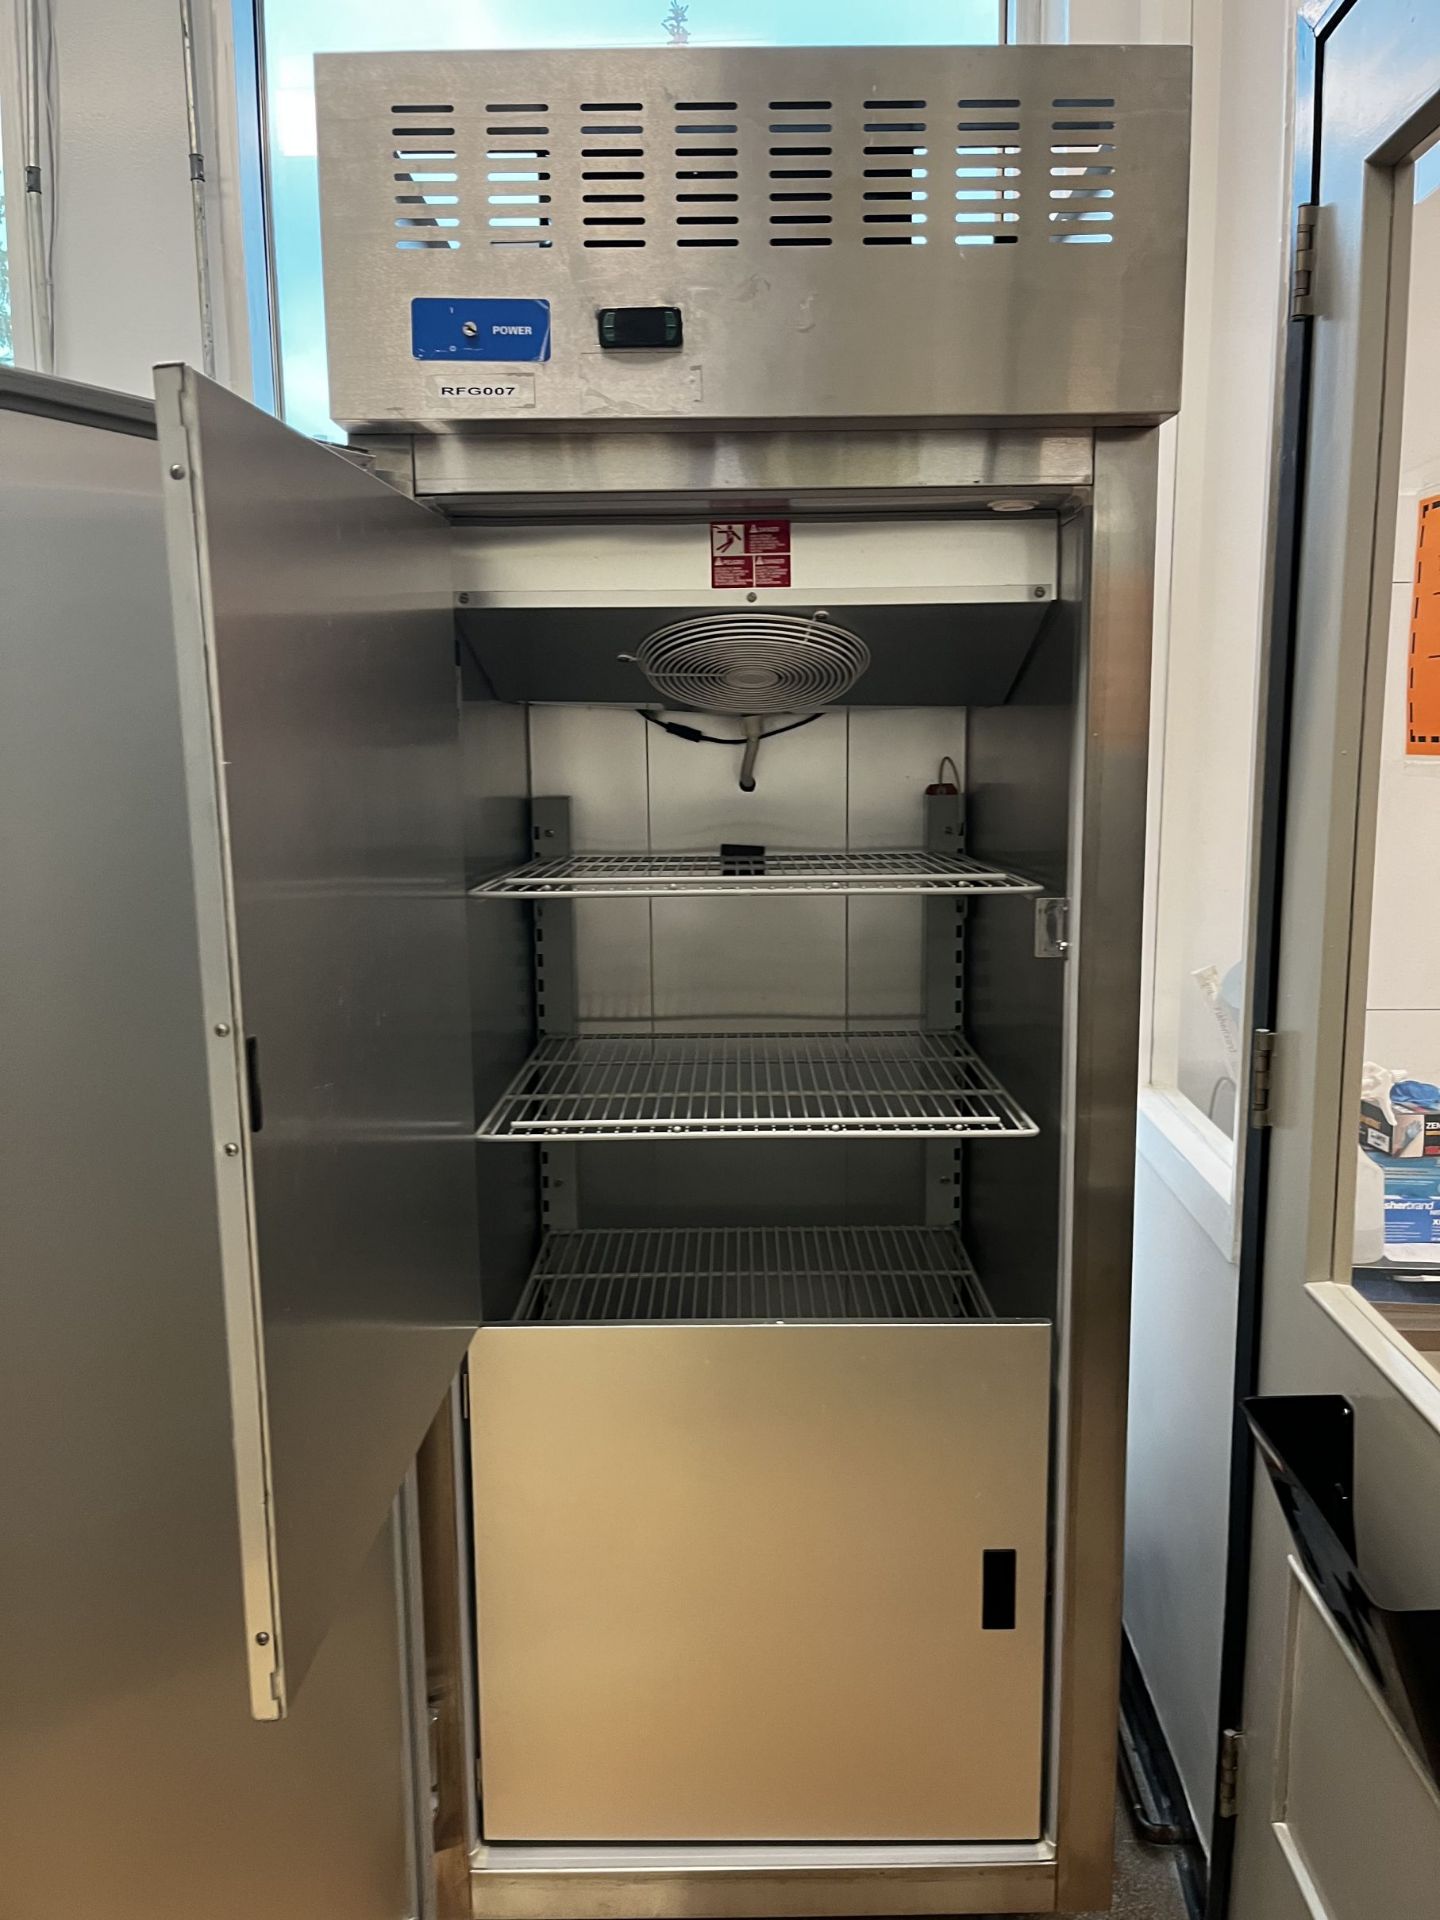 Fisher Scientific Isotemp Refrigerator - Freezer - Image 3 of 7